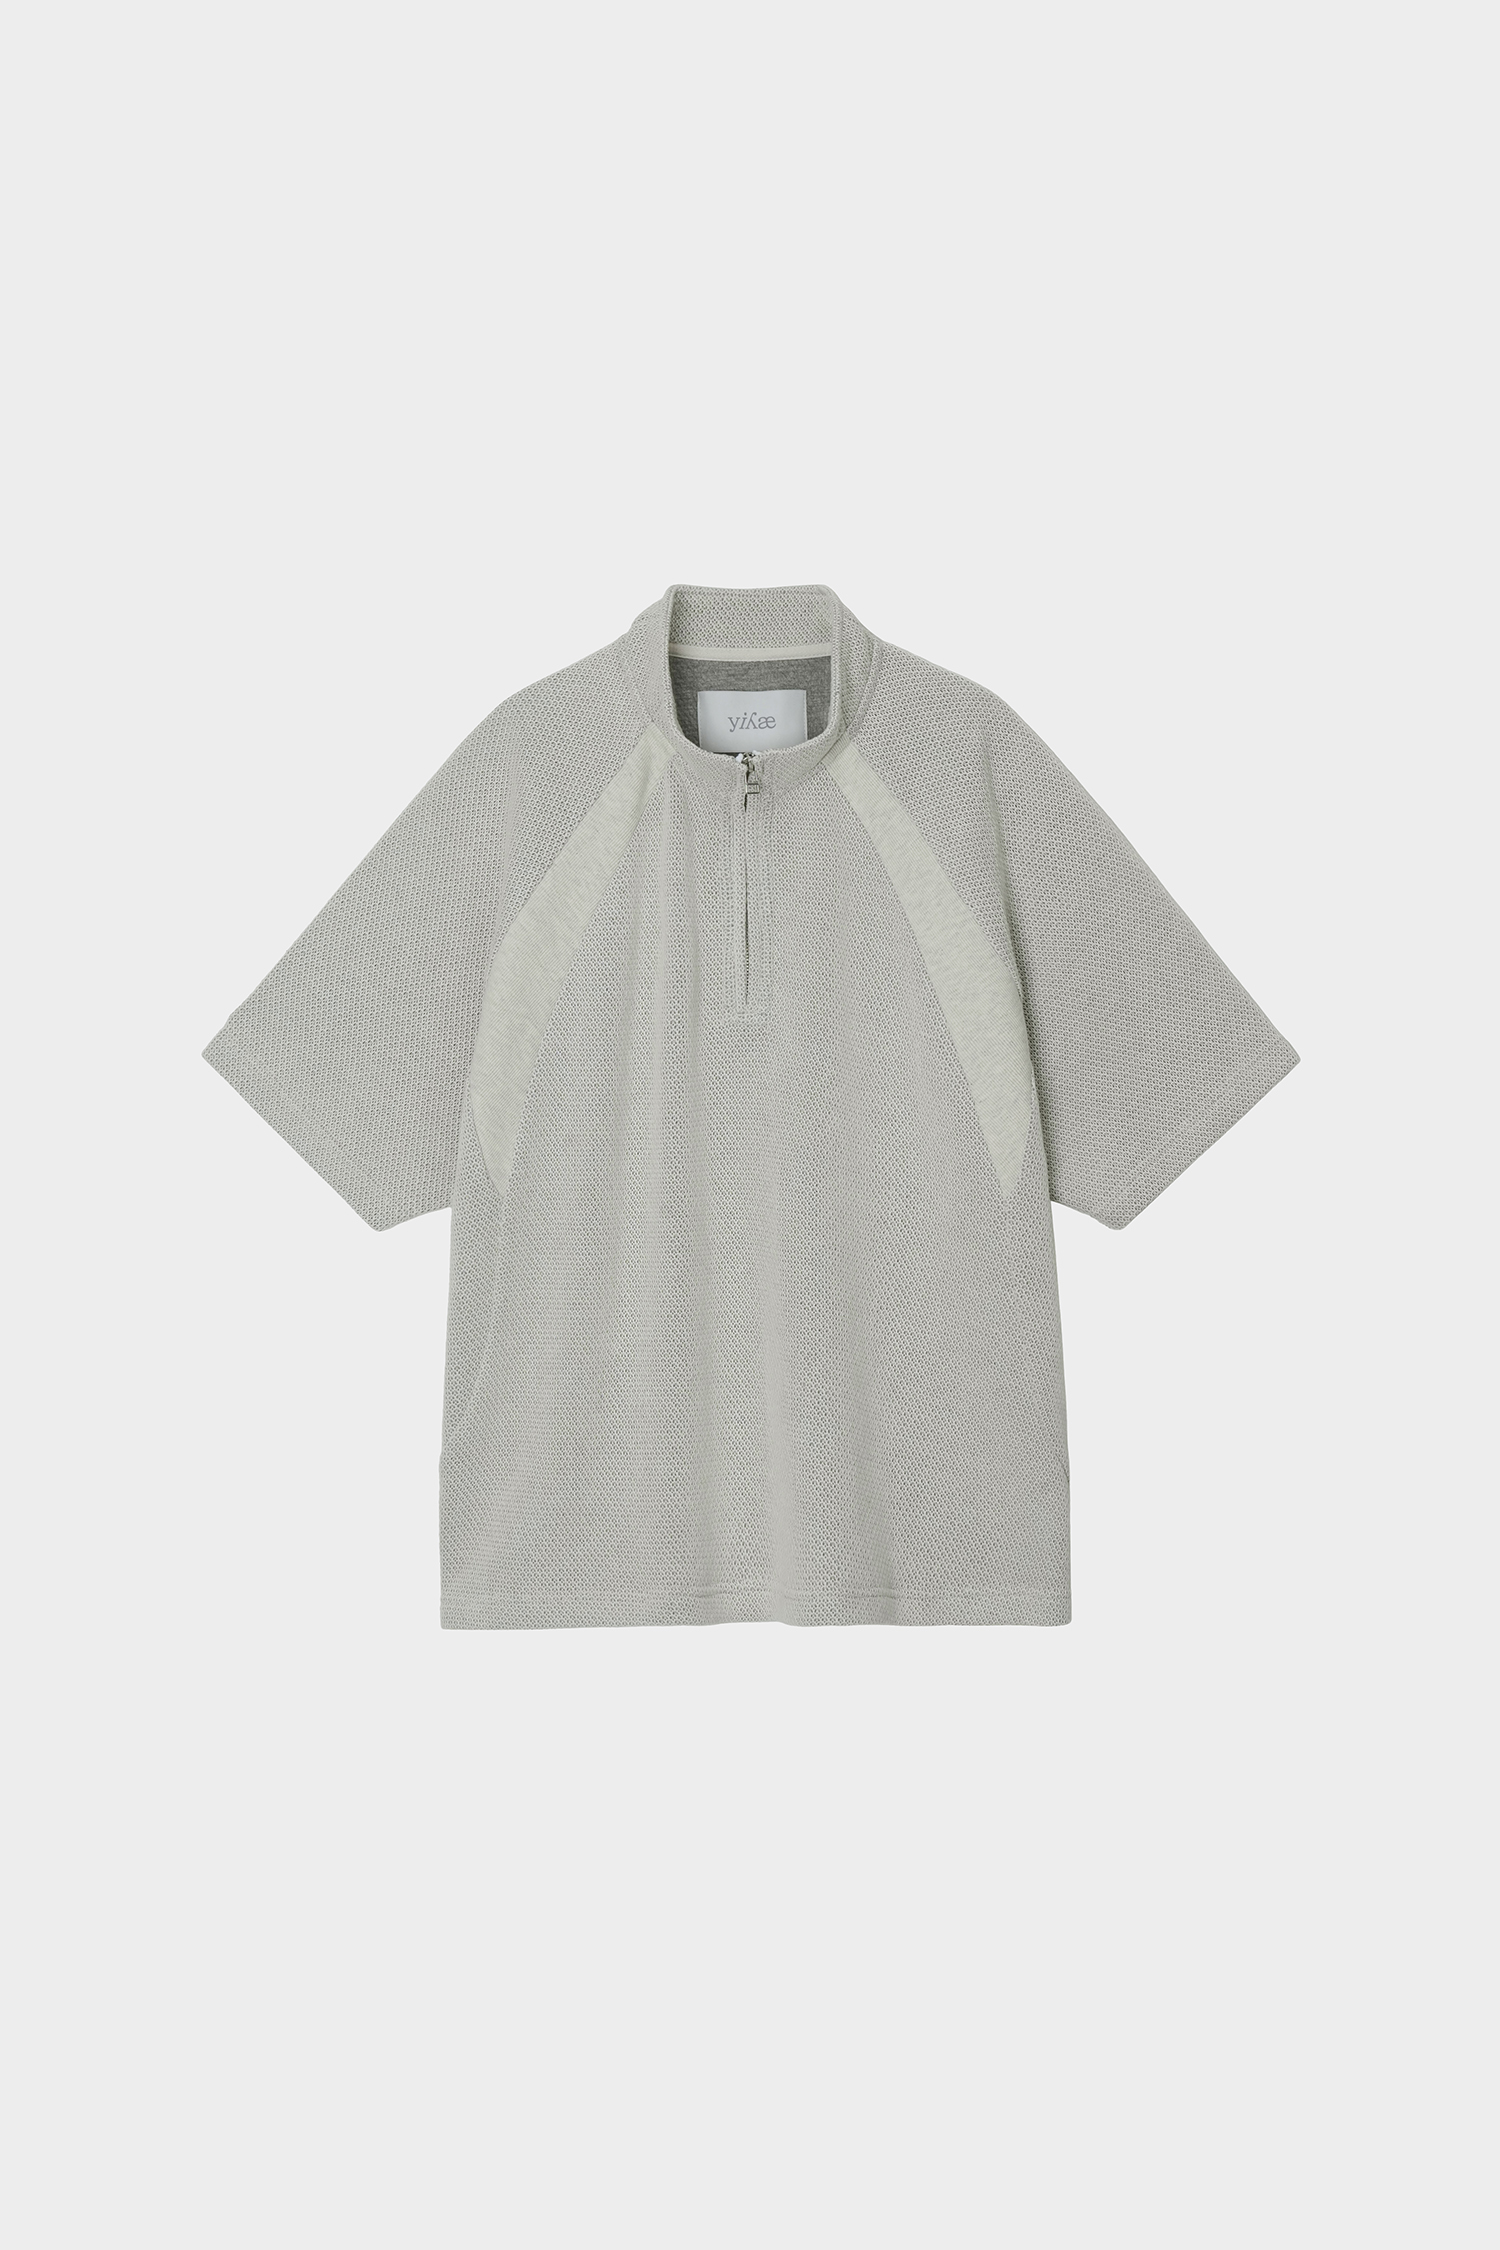 Deflect Half Zip-Up Shirts _ Swirl White